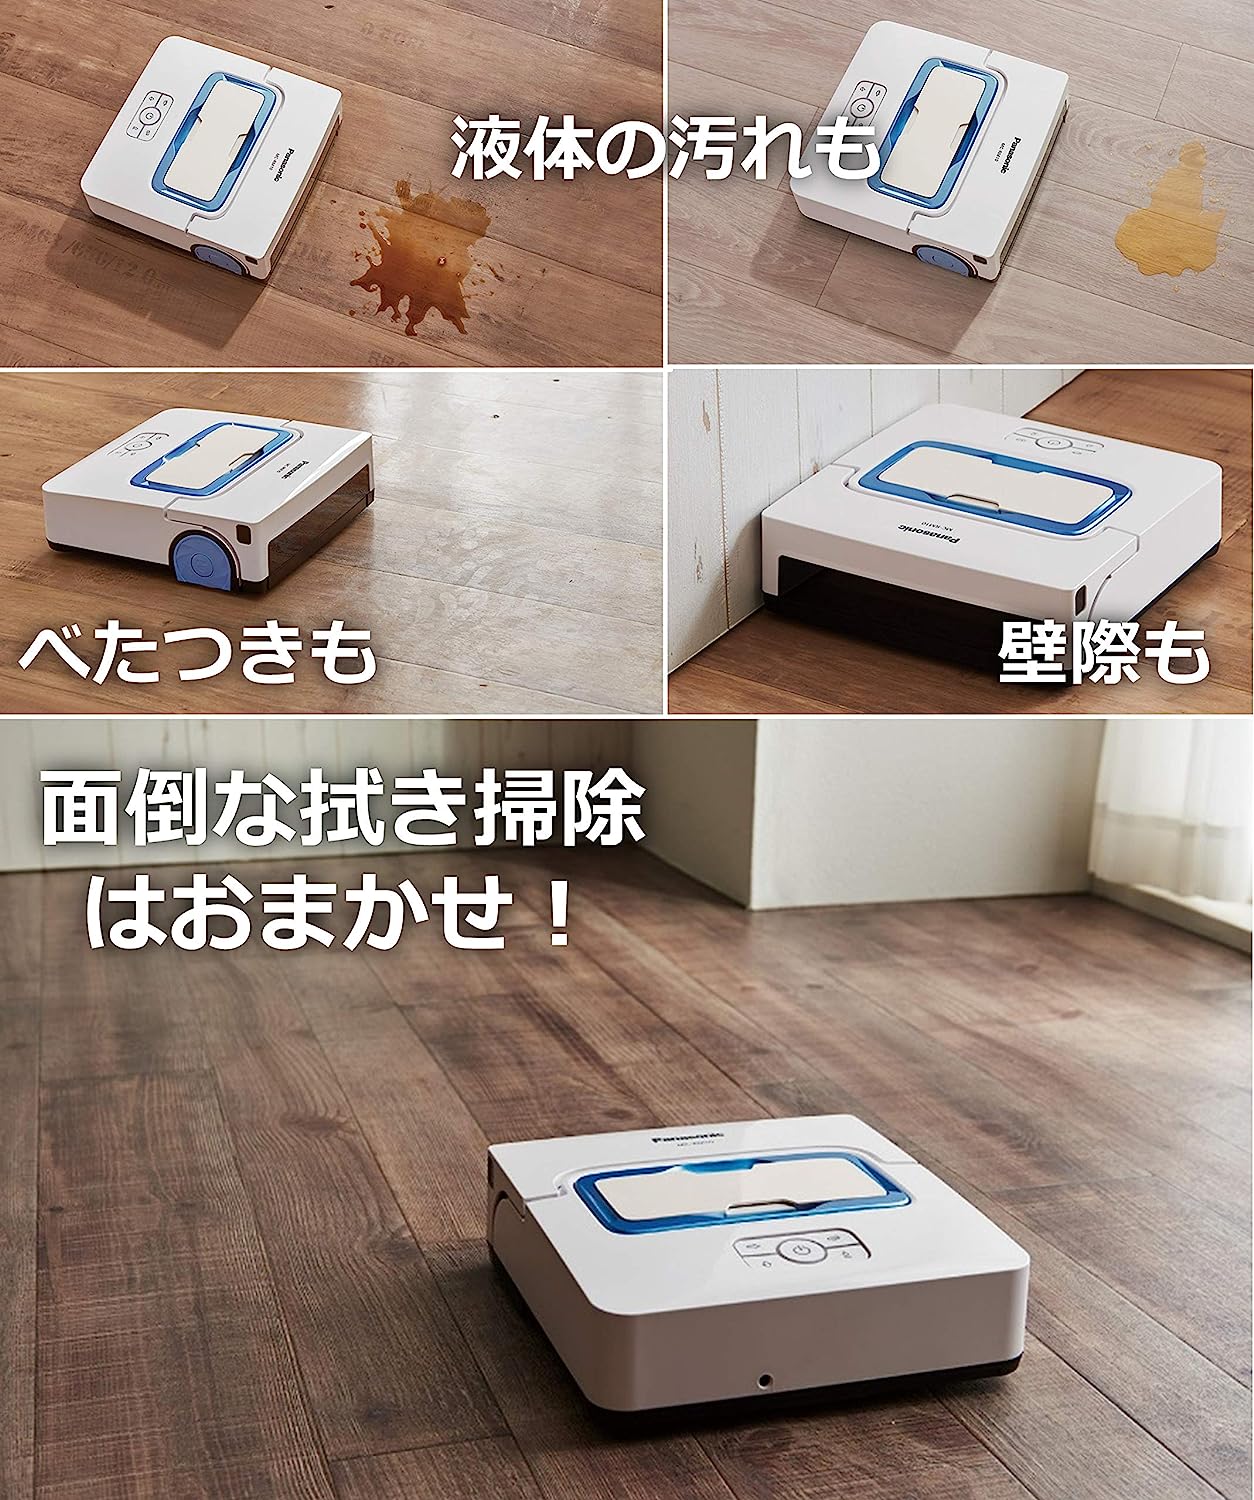 Panasonic 　MC-RM10-W 床拭きロボット掃除機